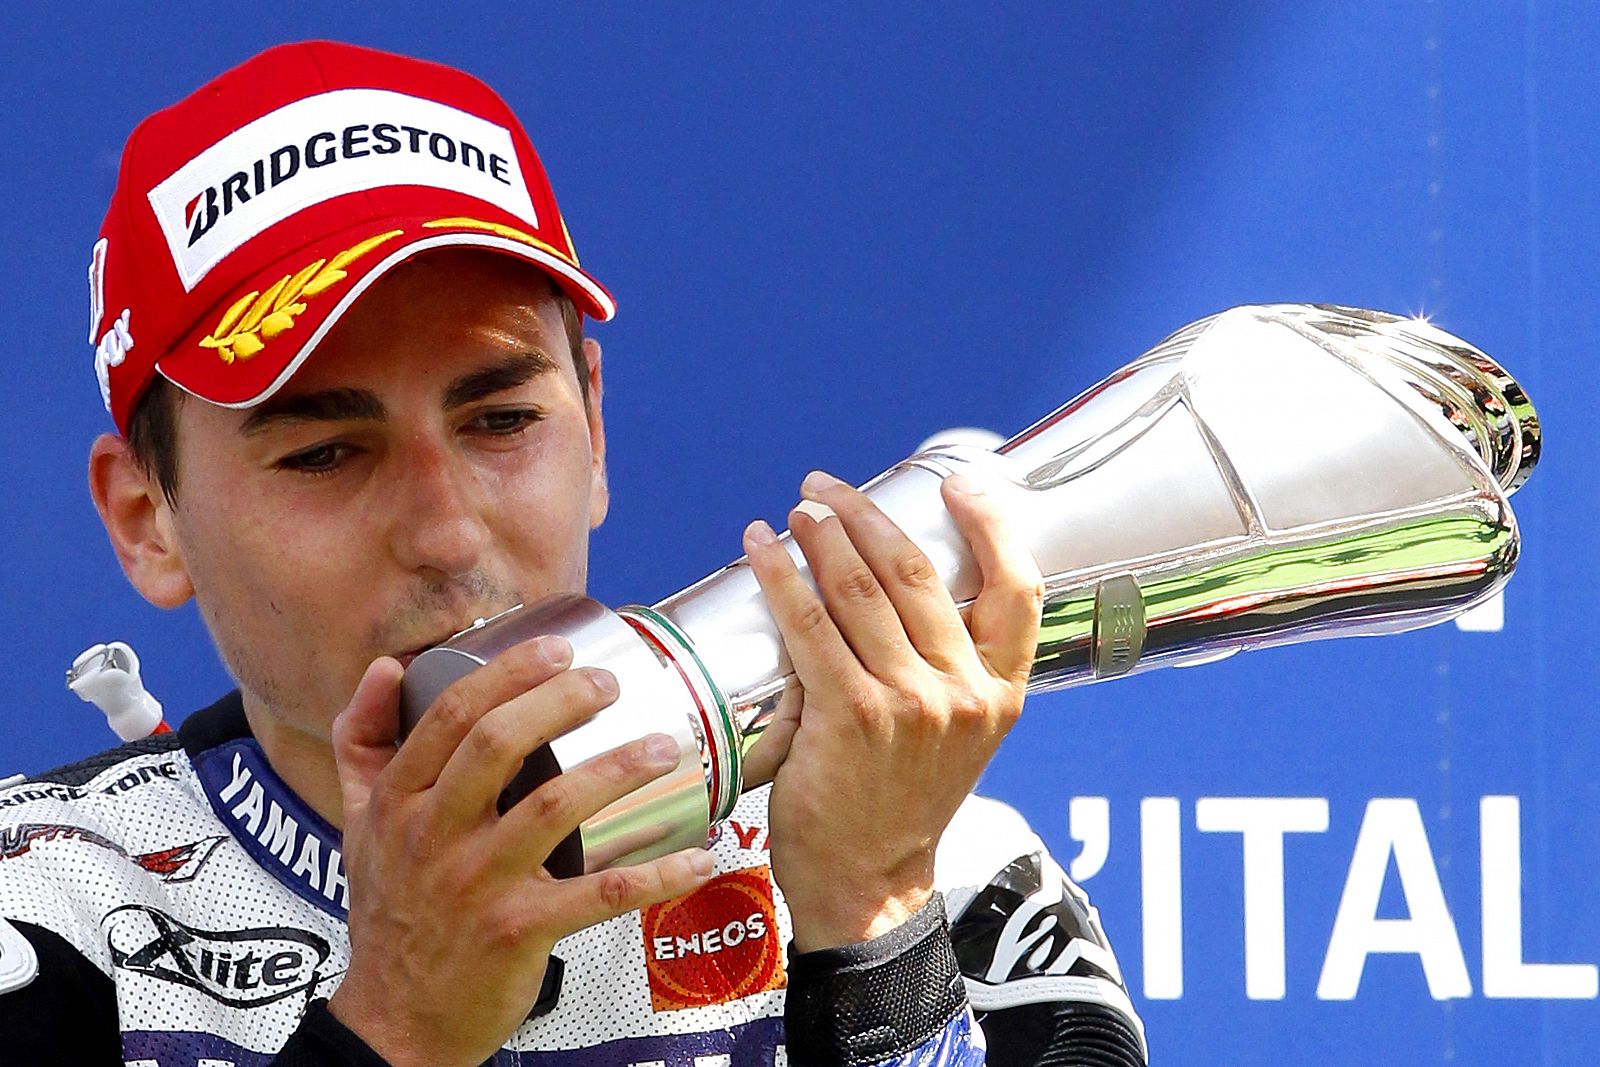 Lorenzo of Spain celebrates on the podium after winning the Italian motorcycling Grand Prix race at Mugello circuit